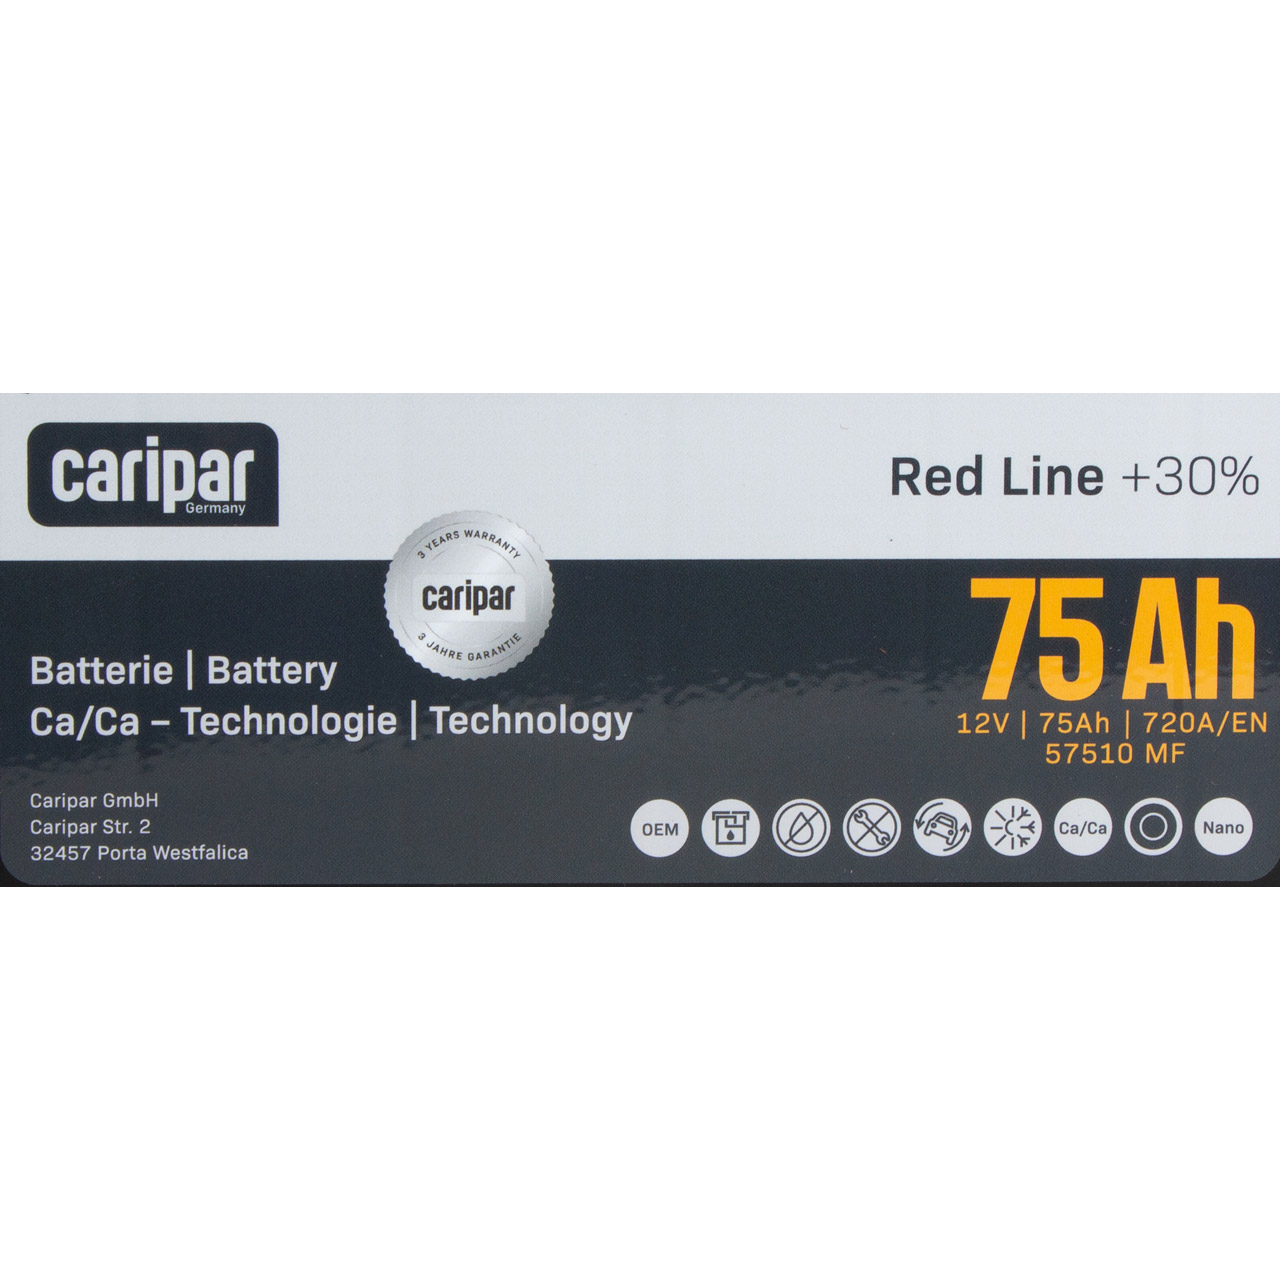 CARIPAR RED LINE +30% PKW KFZ Autobatterie Starterbatterie 12V 75Ah 720A/EN B13